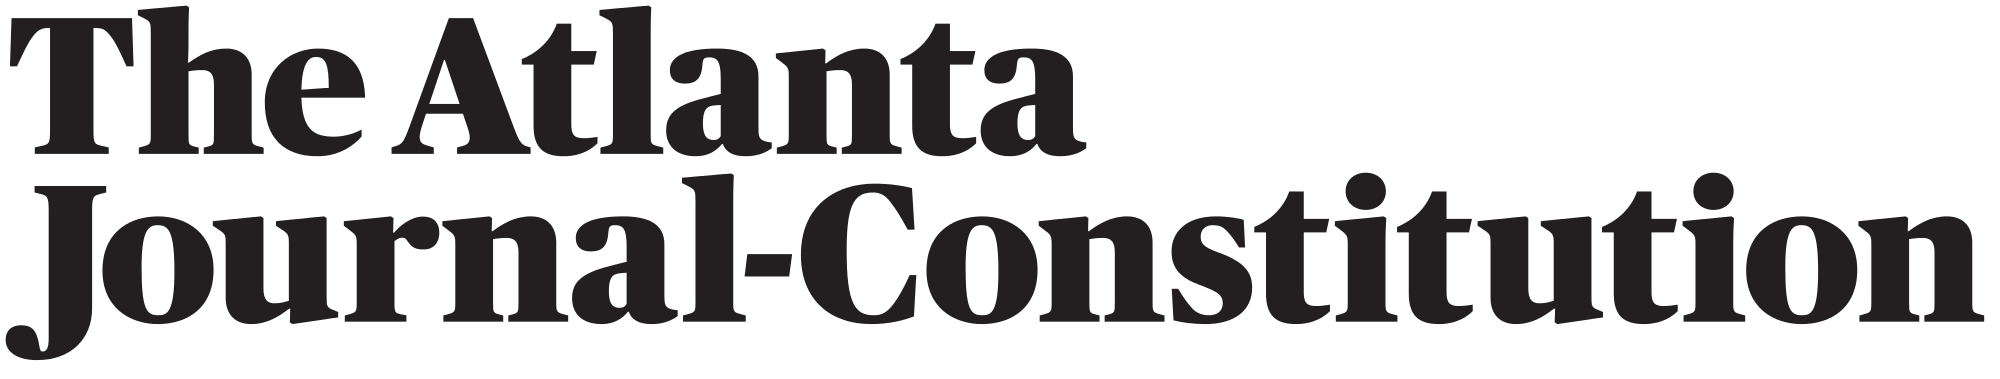 Atlanta Newspaper Logo - The Atlanta Journal Constitution Logo.svg